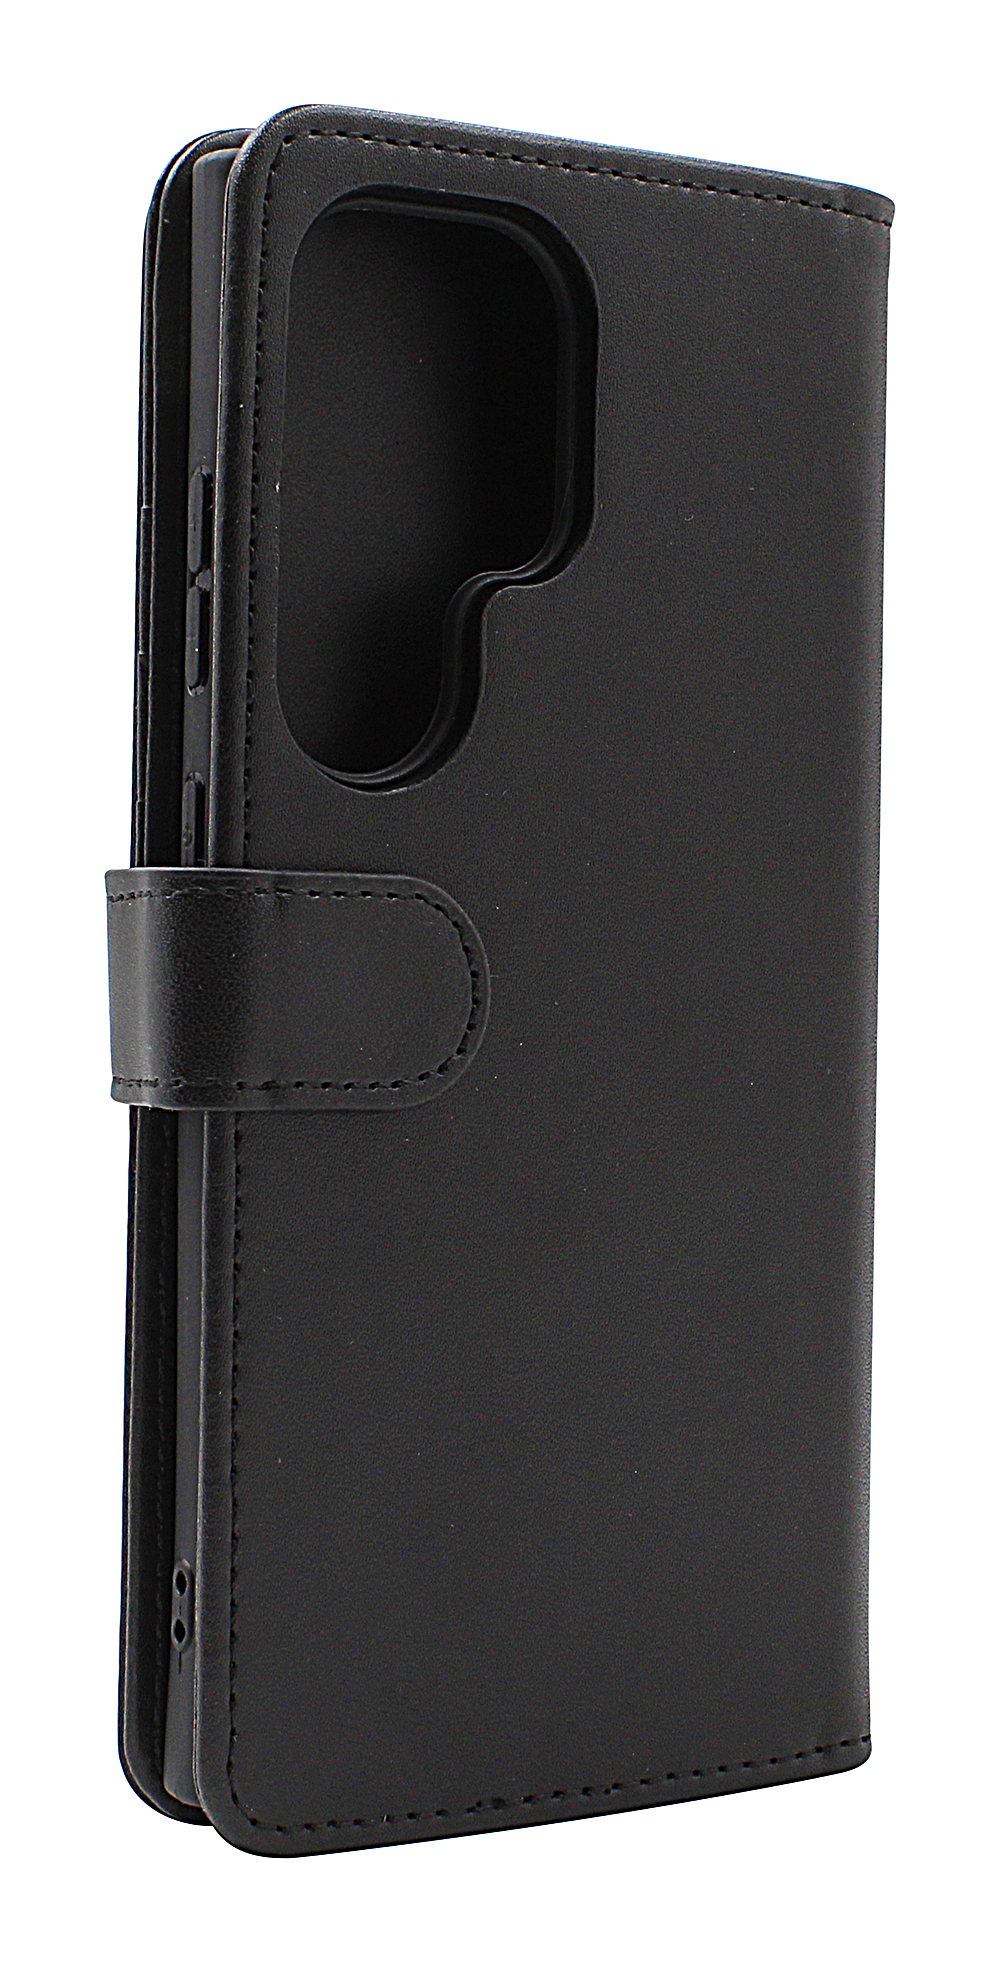 Skimblocker XL Wallet Samsung Galaxy S24 Ultra 5G (SM-S928B/DS)